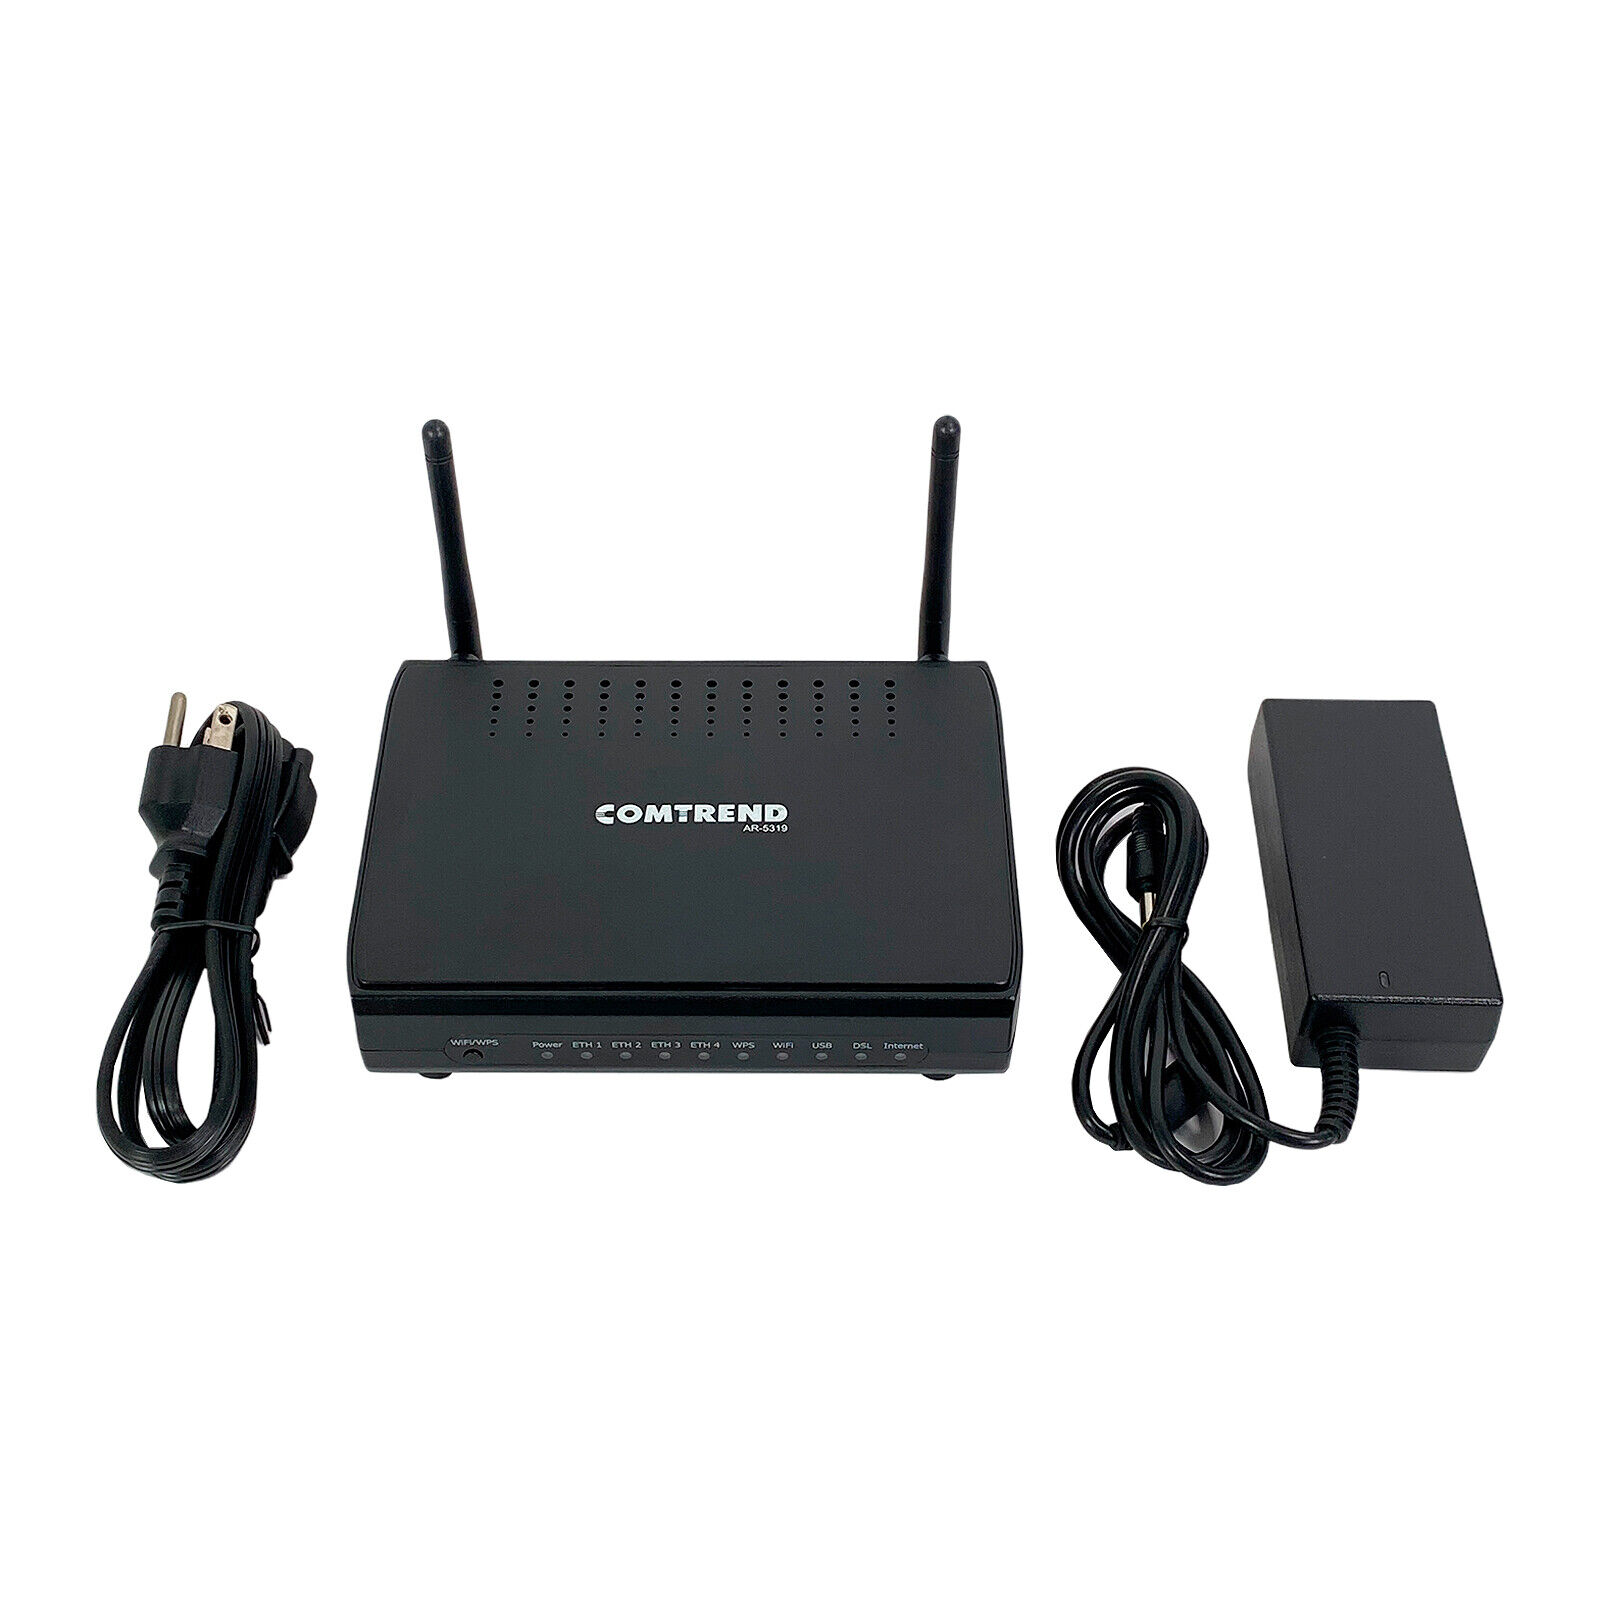 Comtrend AR-5319 Wireless N Gateway Ethernet ADSL 2+ Router Modem w/ Adapter